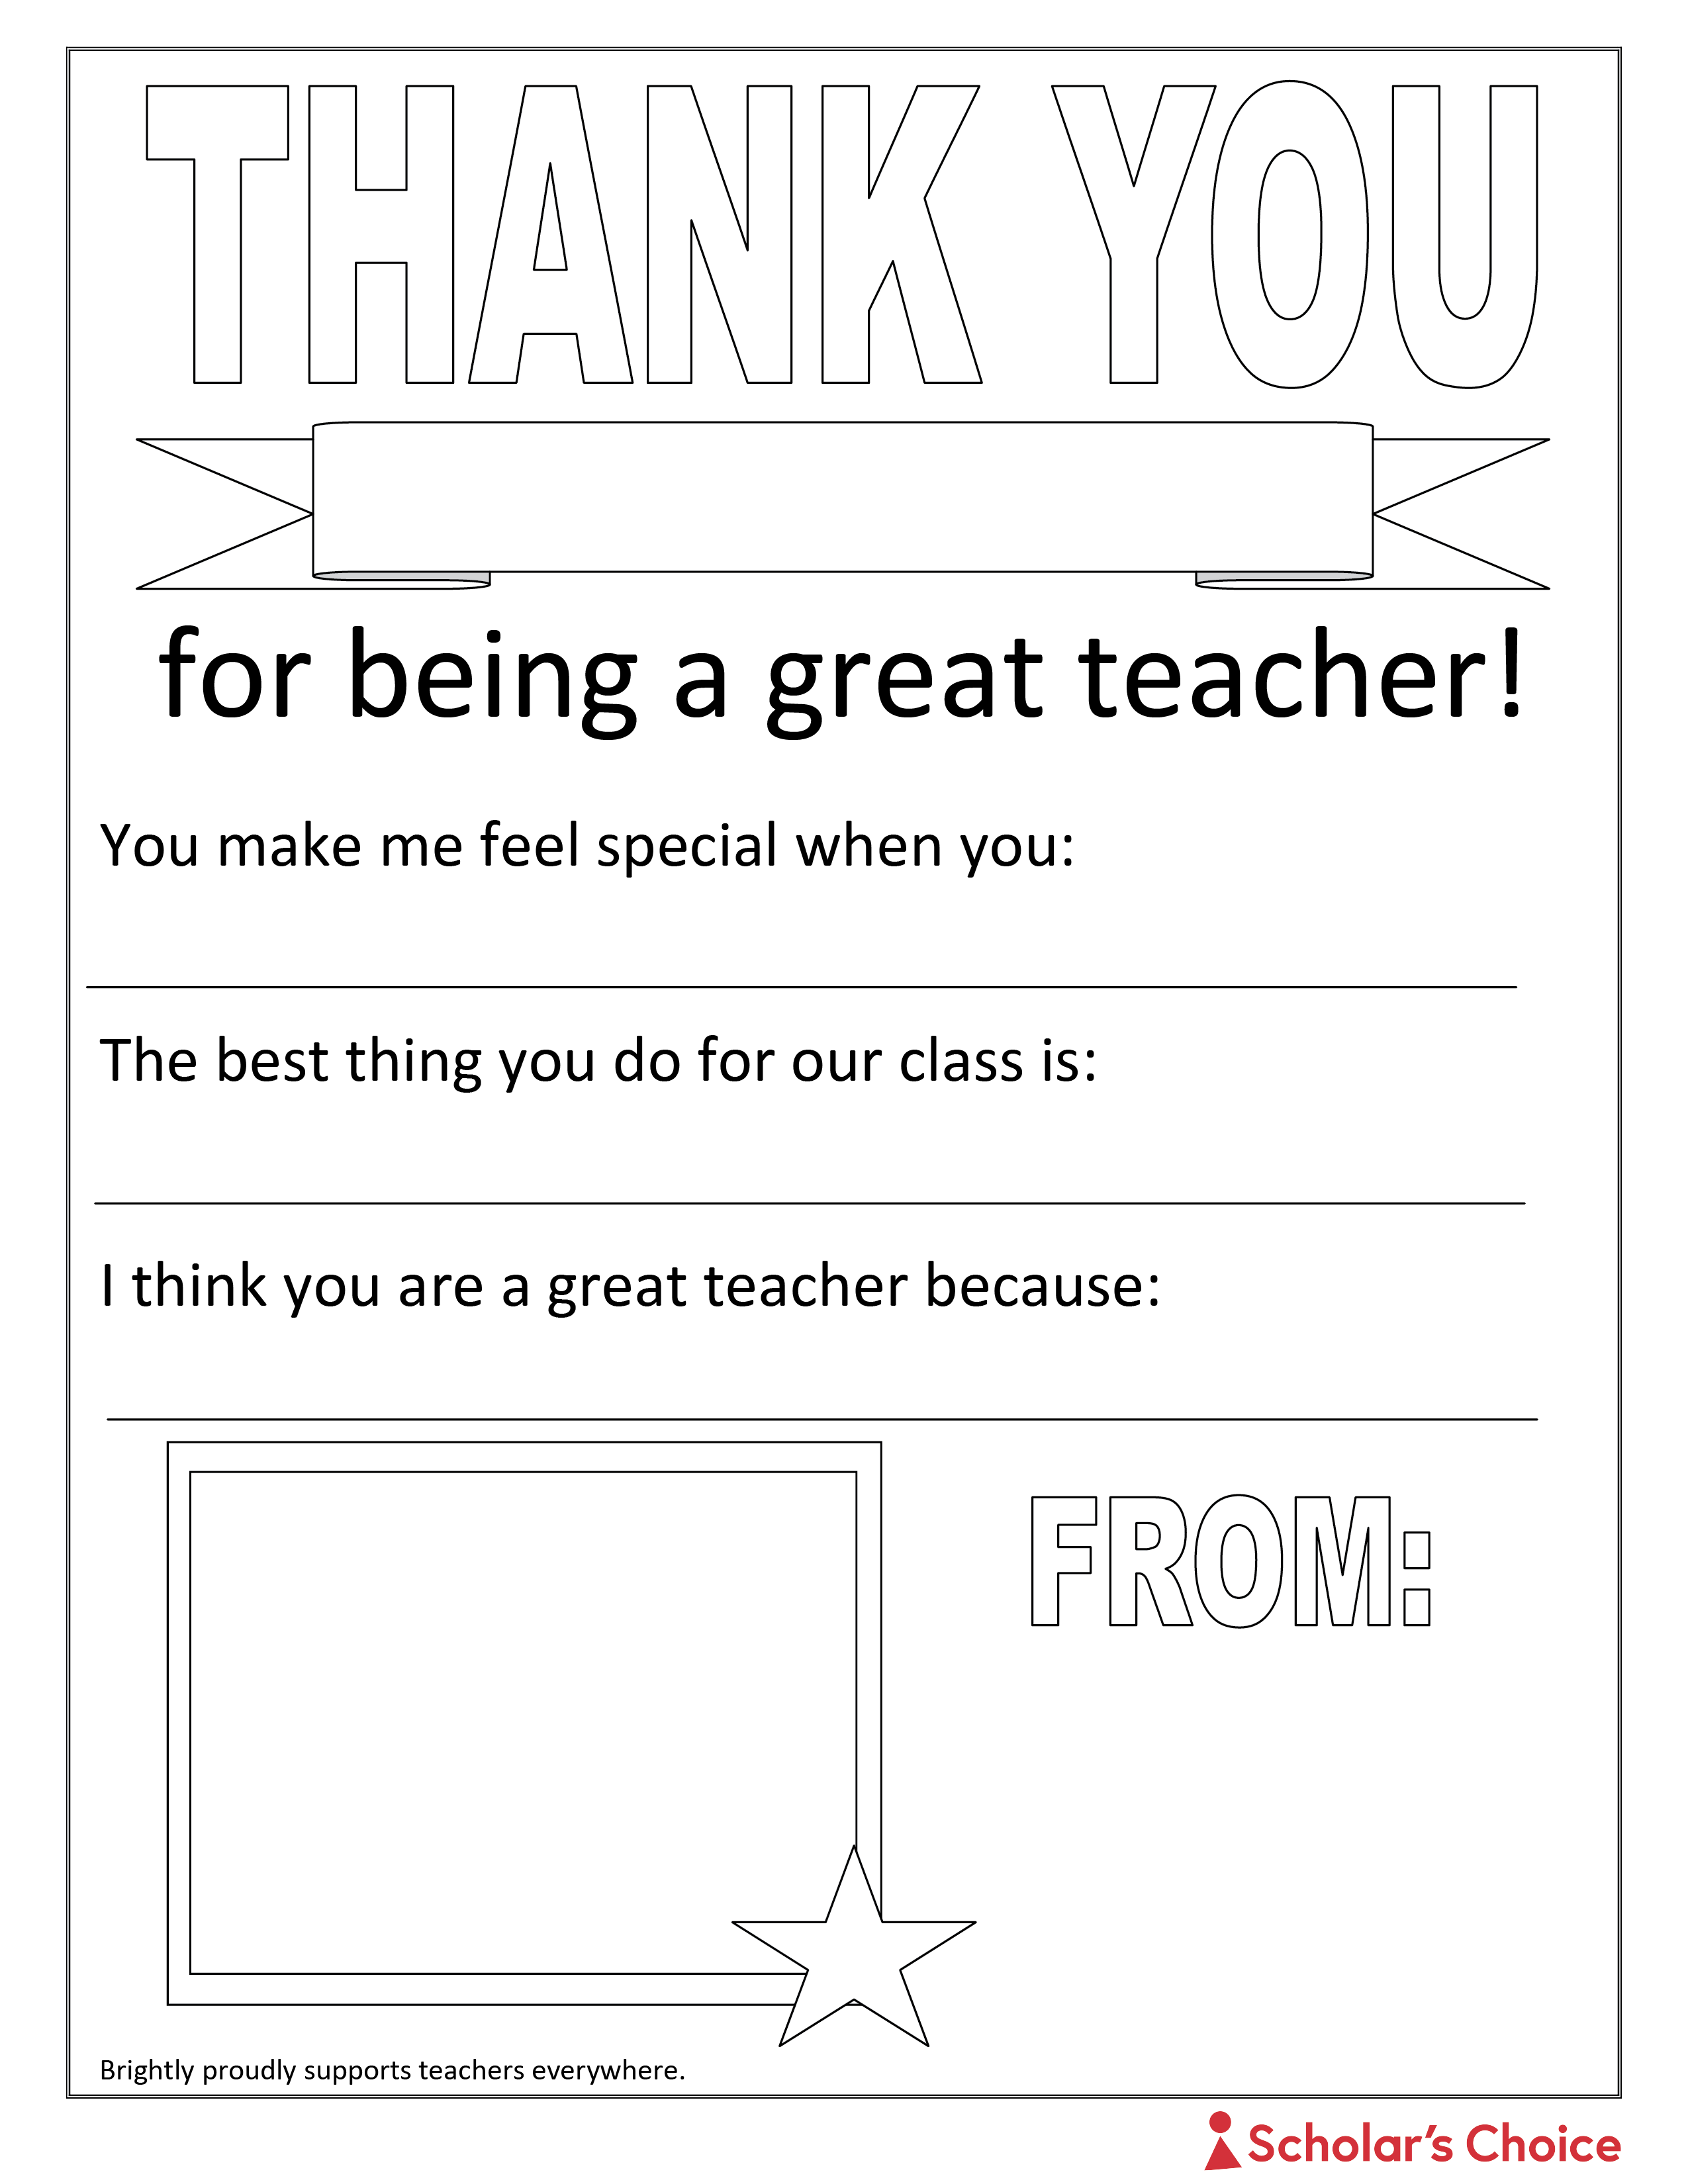 teacher-appreciation-01